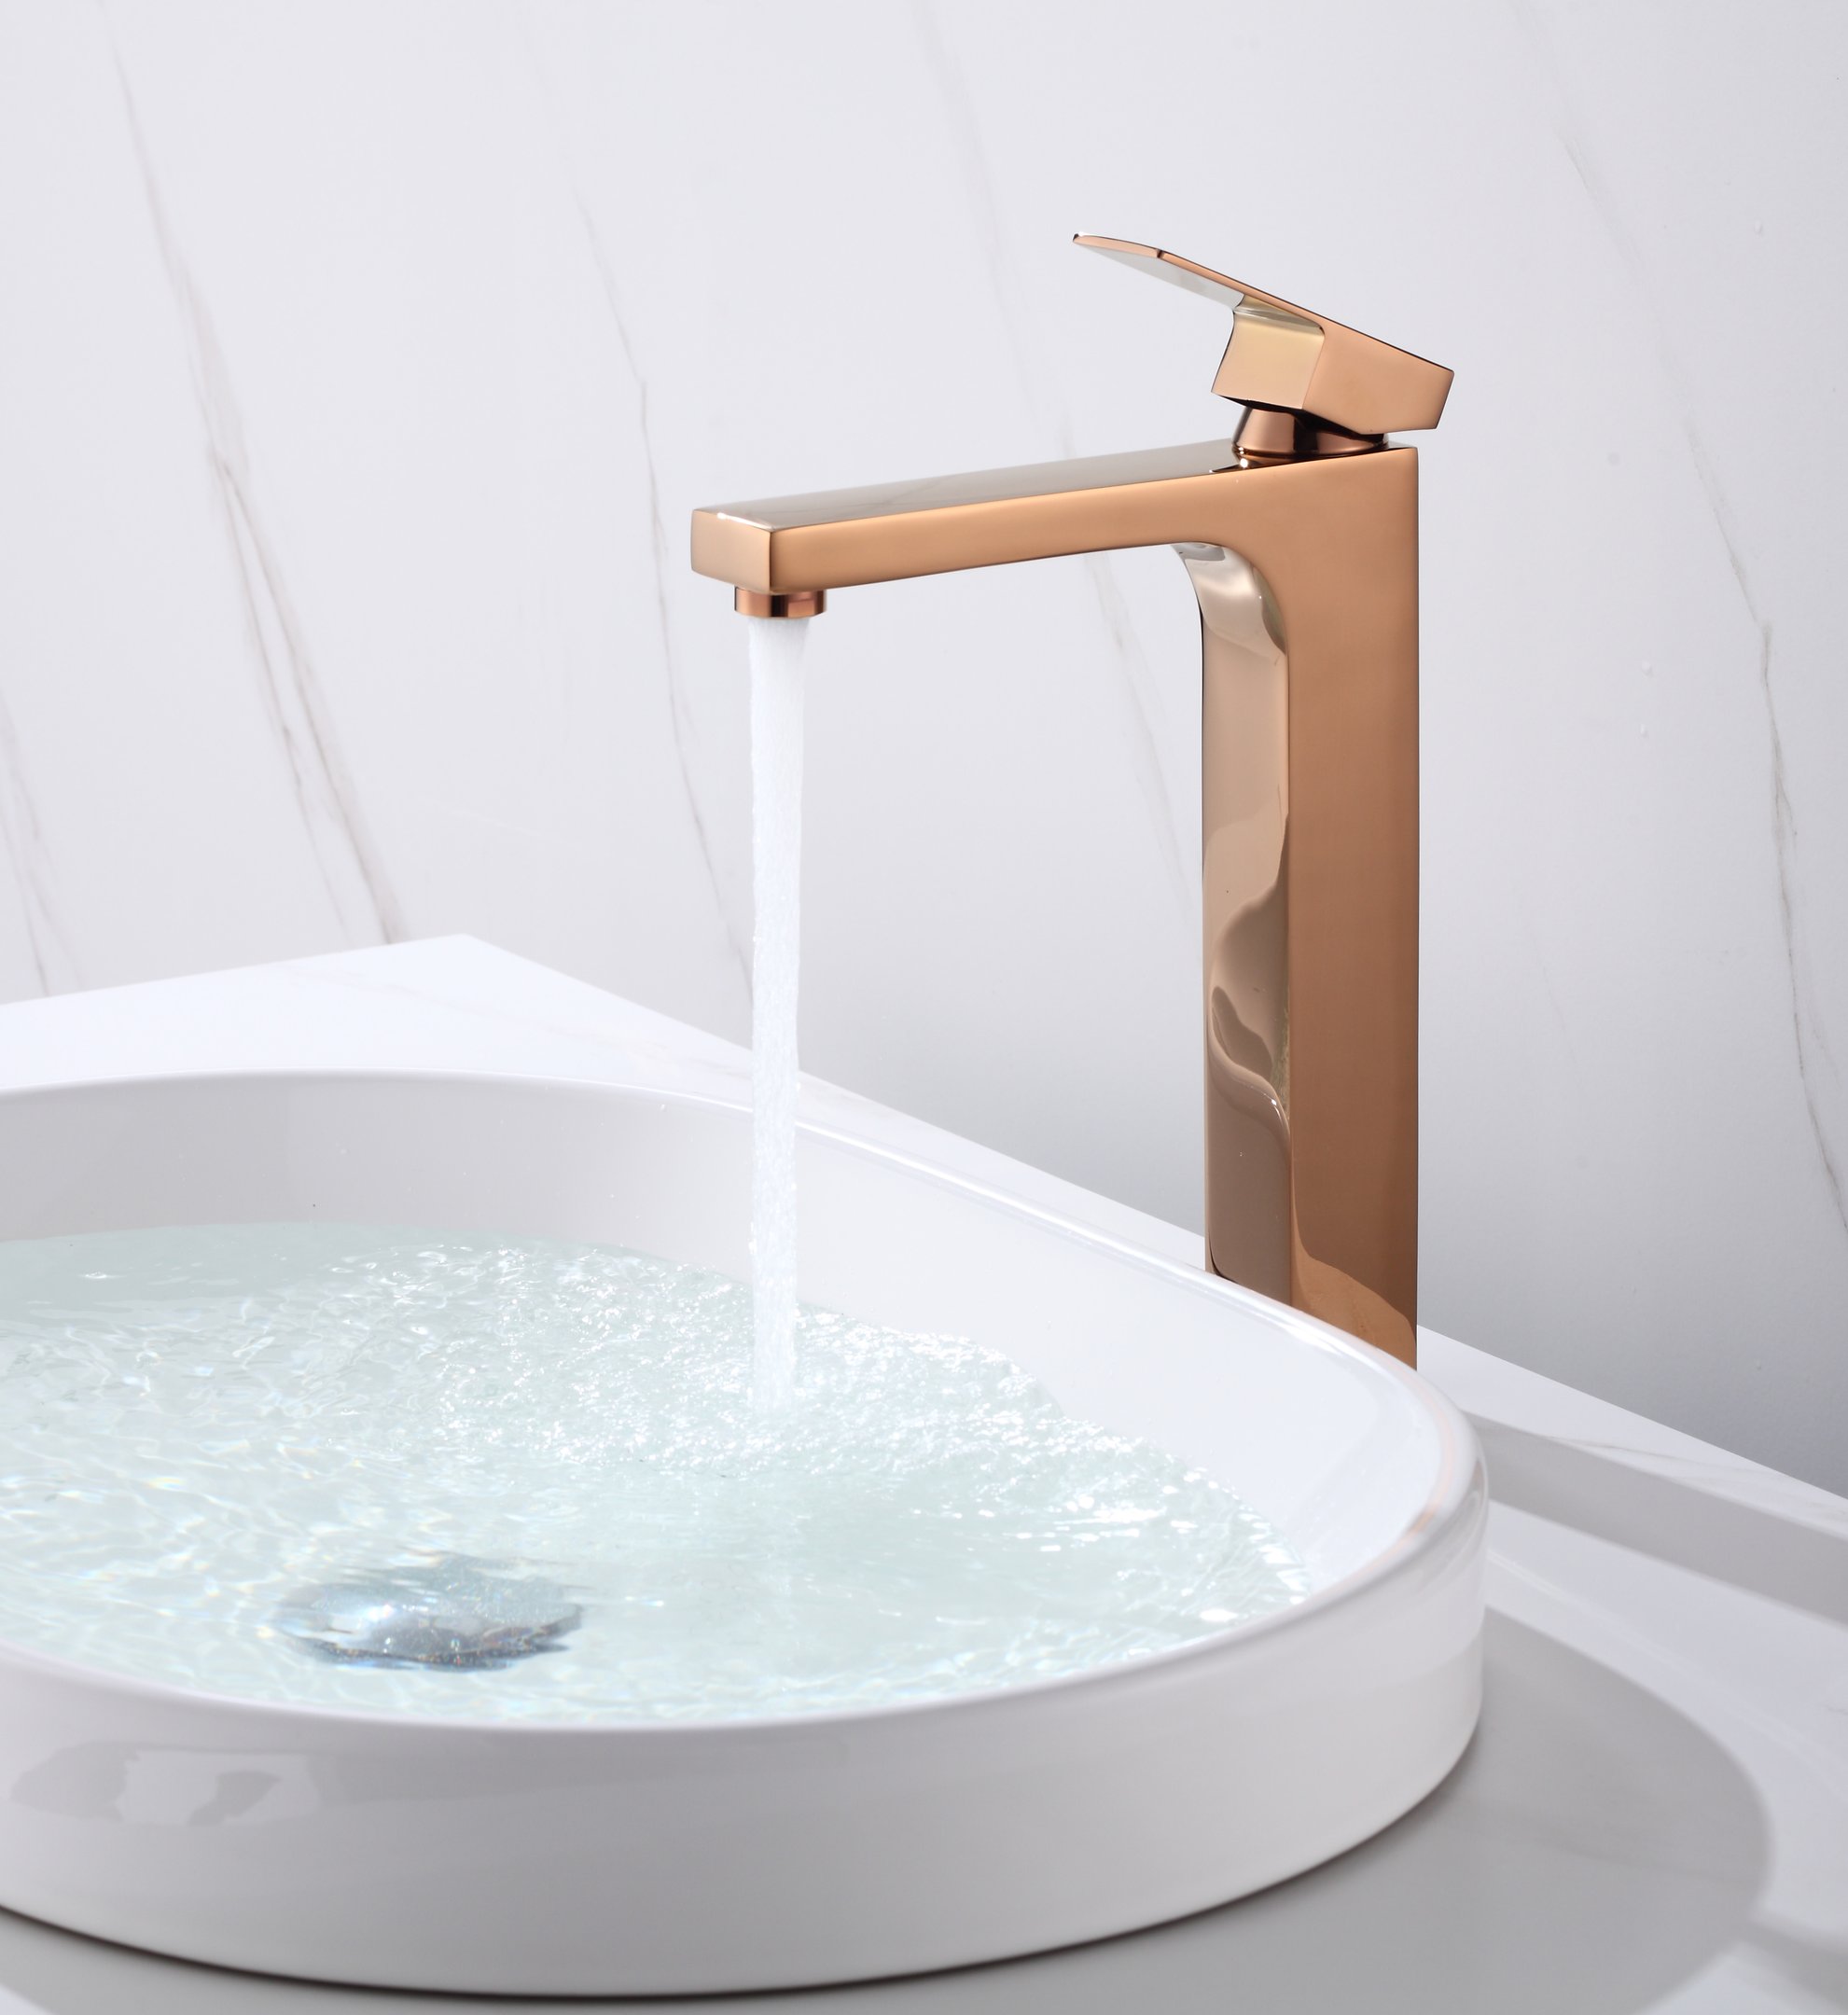 Torneira Monocomando Rose Gold Quadrada Banheiro Lavabo Bica Alta Luxo Inovartte In50 - 4